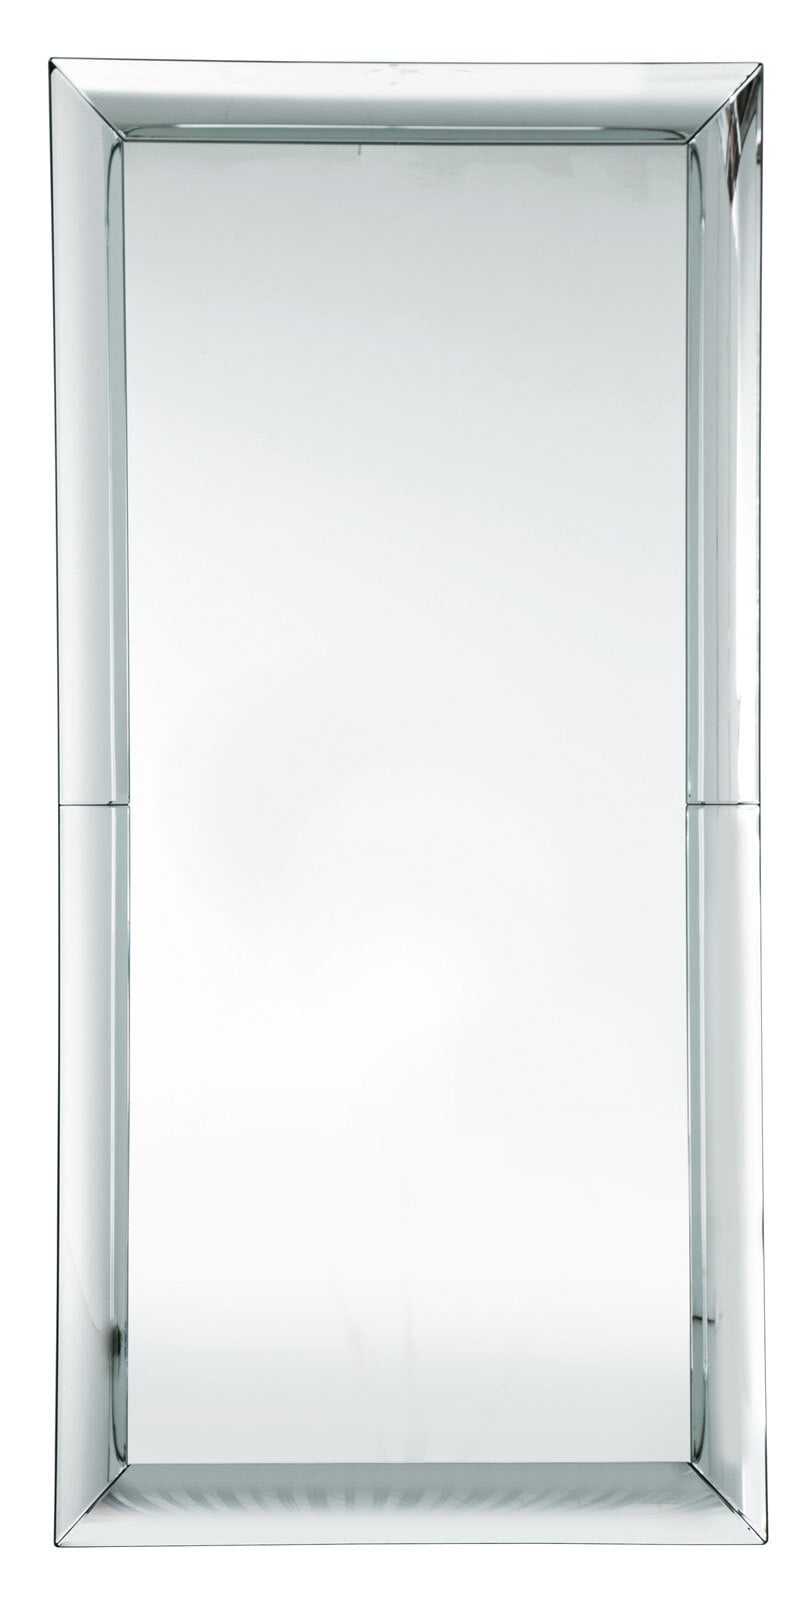 KARE DESIGN Spiegel BEAUTY 99 x 207 cm silberfarbig